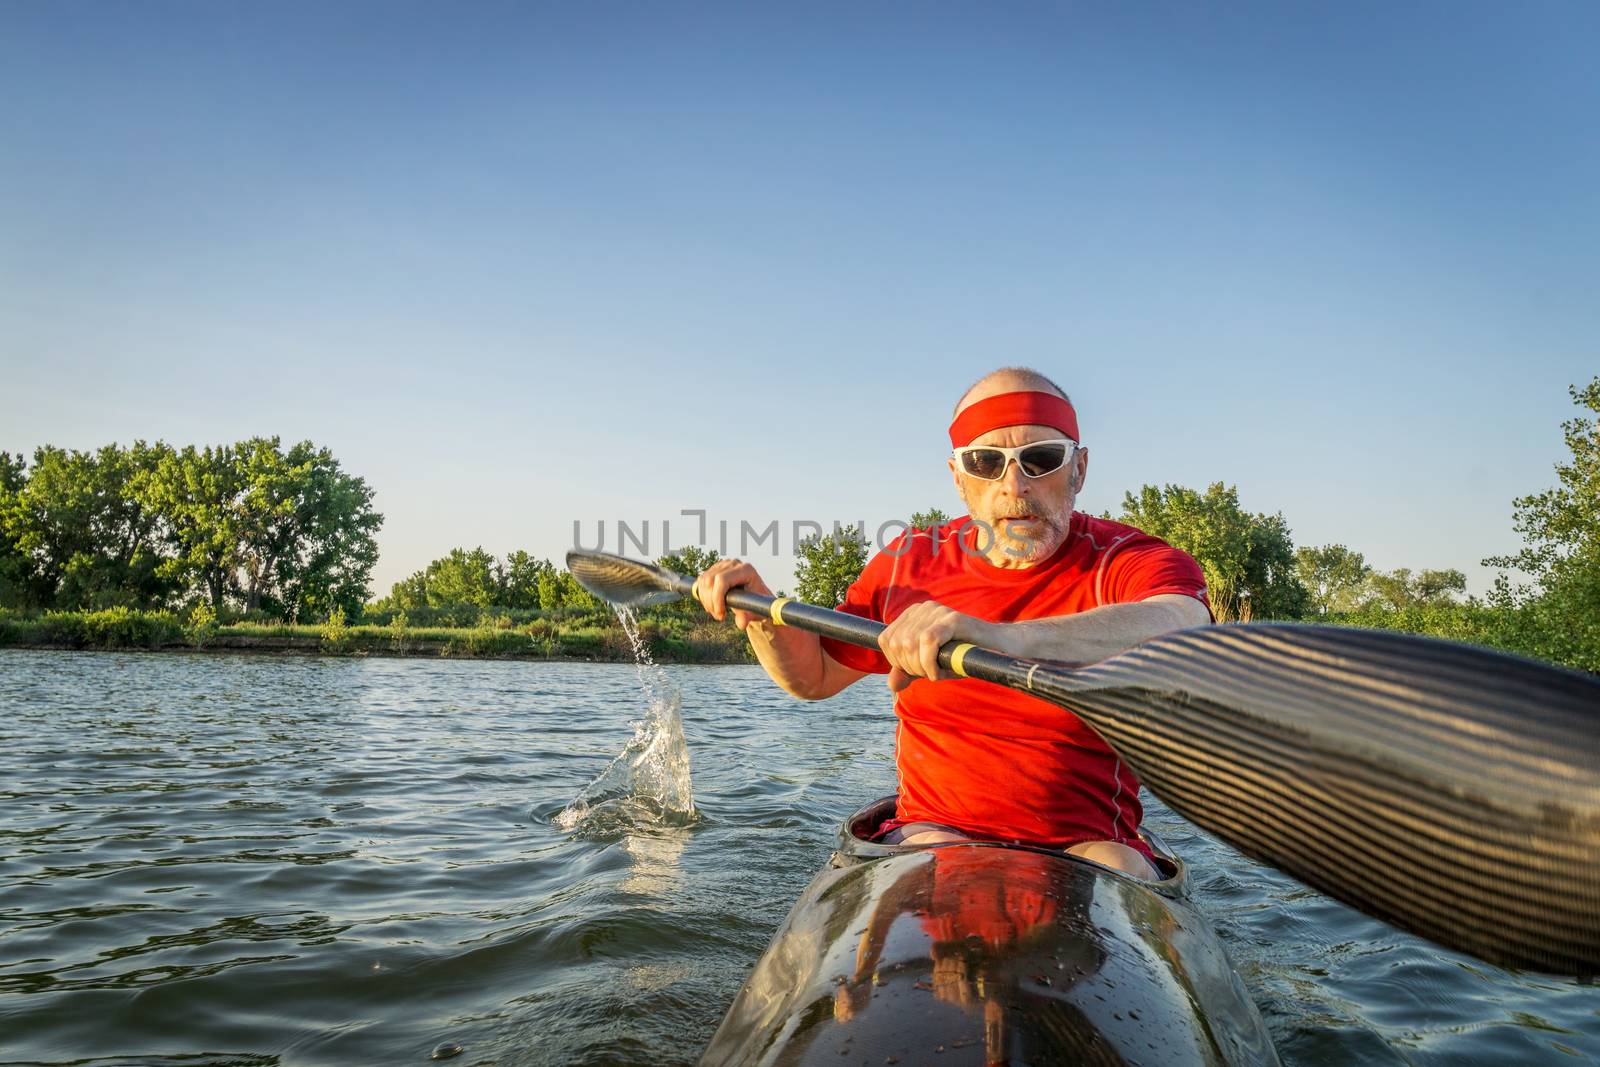 paddling racing sea kayak by PixelsAway